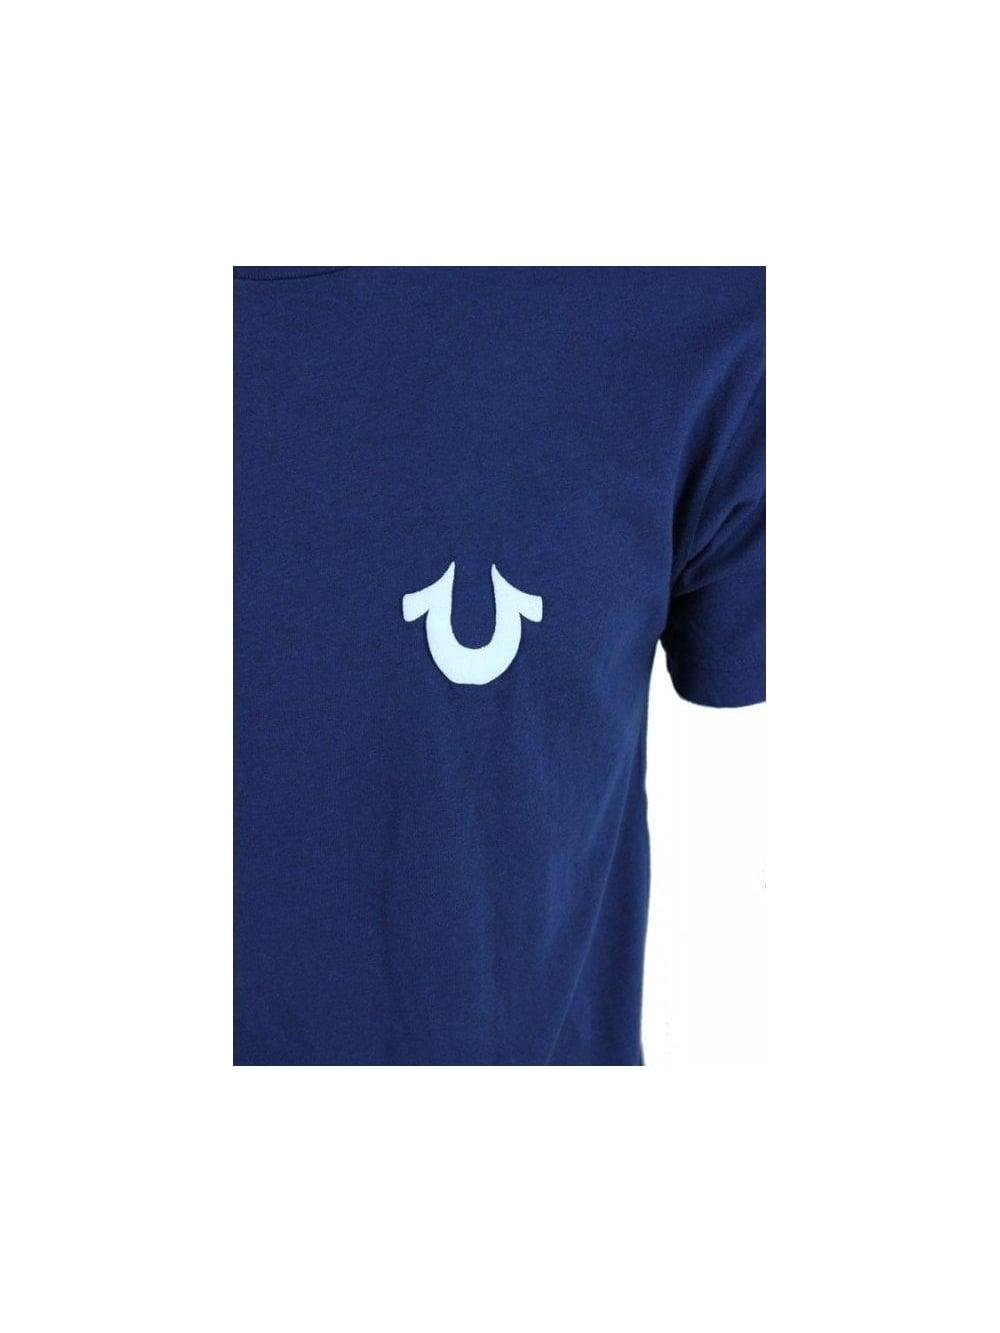 Navy U Logo - True Religion Traditional U Logo T.Shirt in Navy - Northern Threads